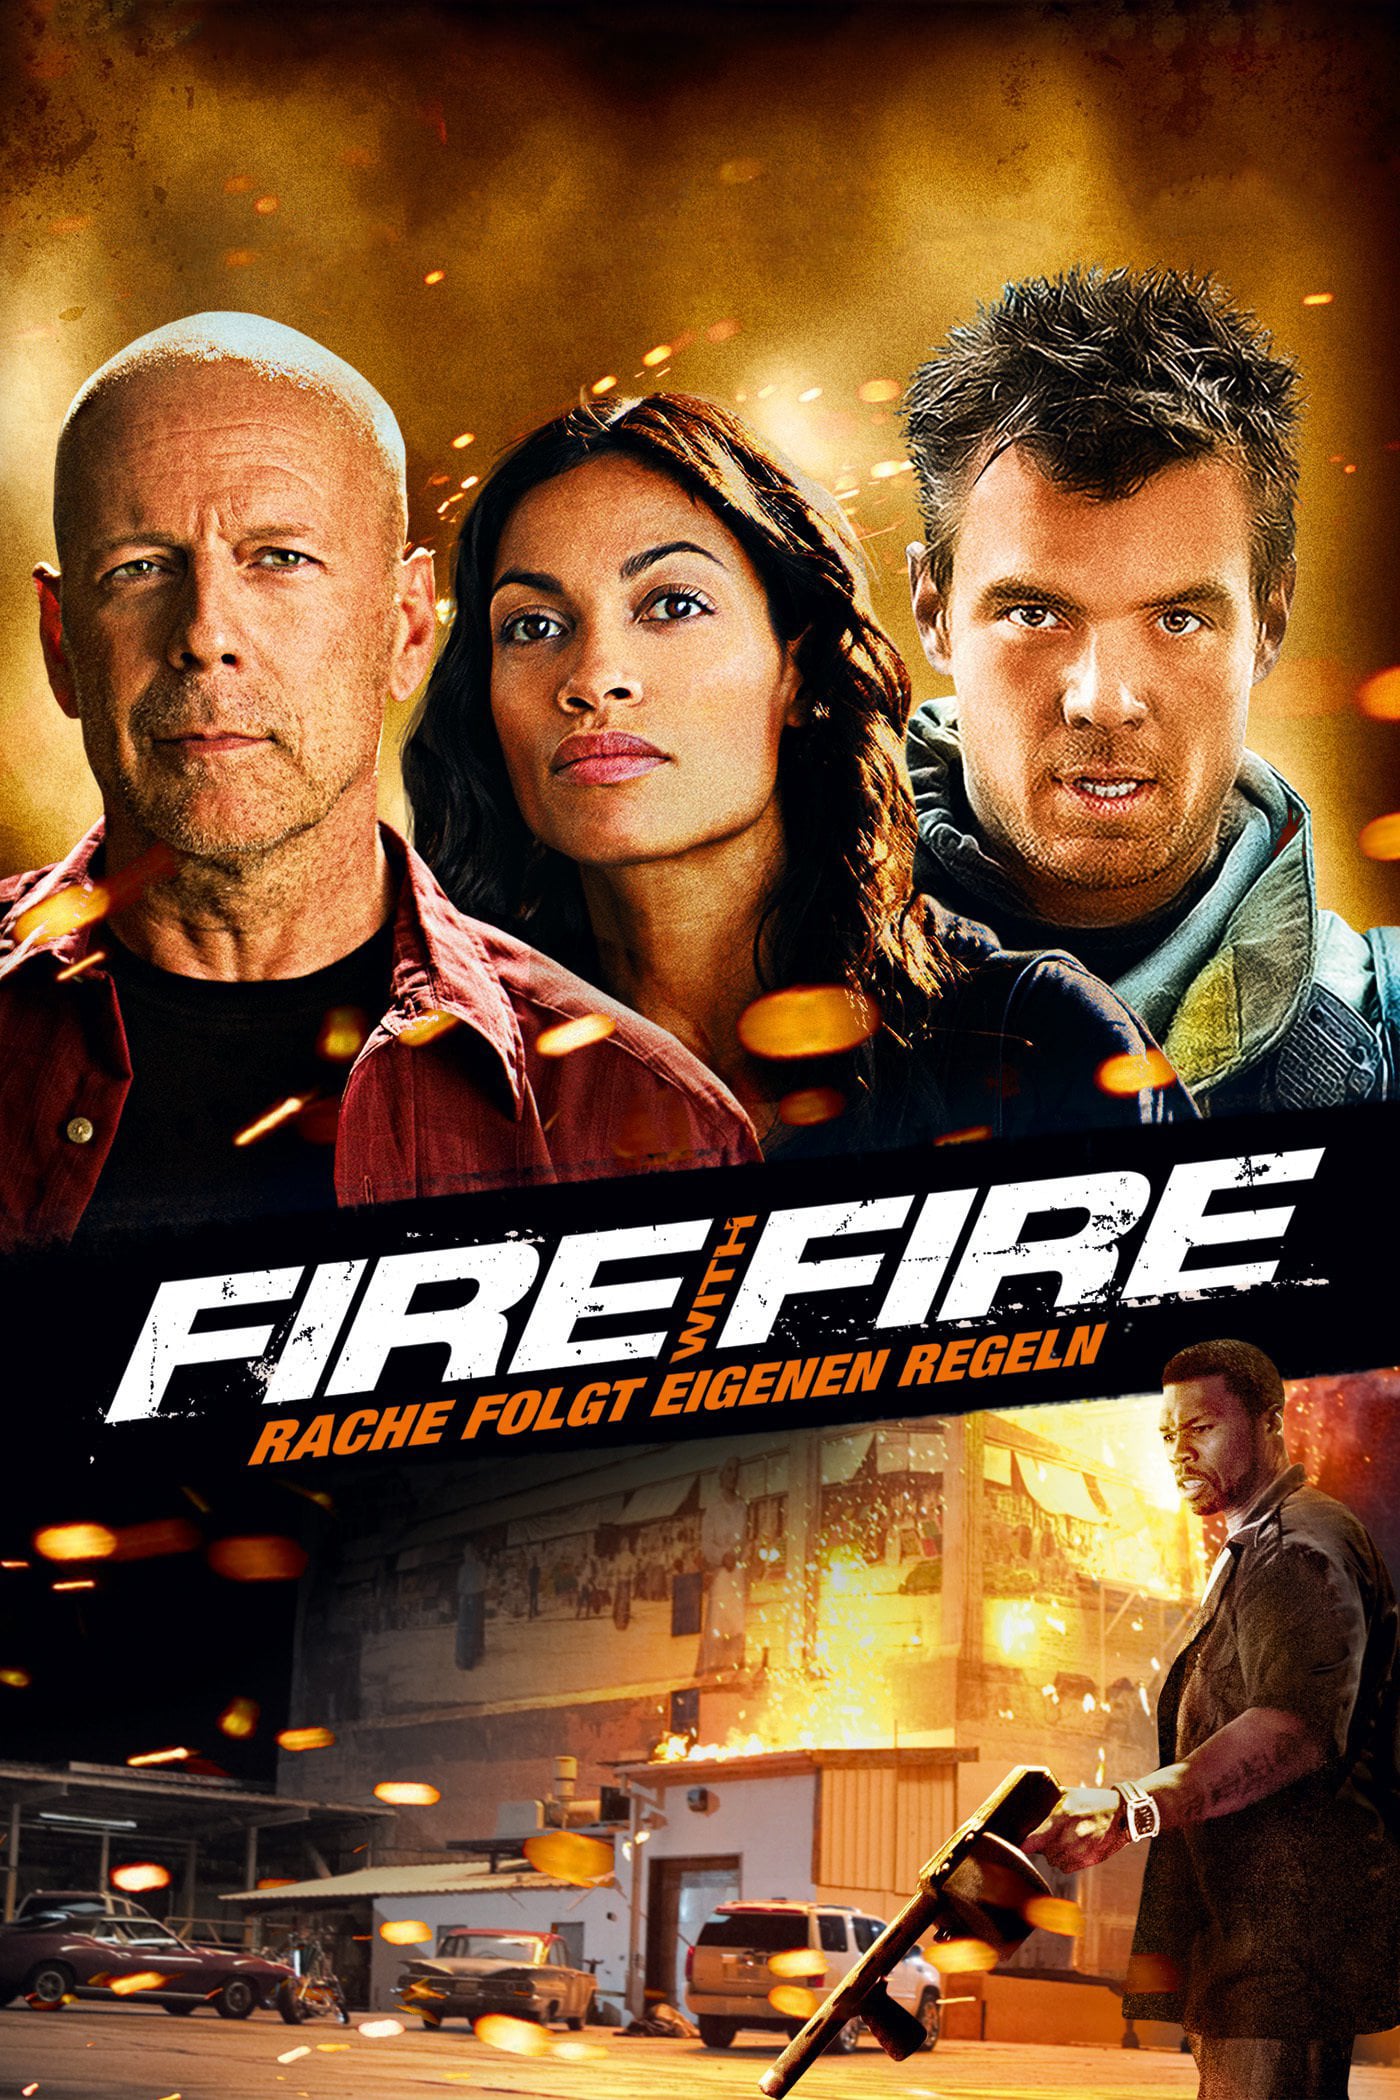 Plakat von "Fire with Fire - Rache folgt eigenen Regeln"